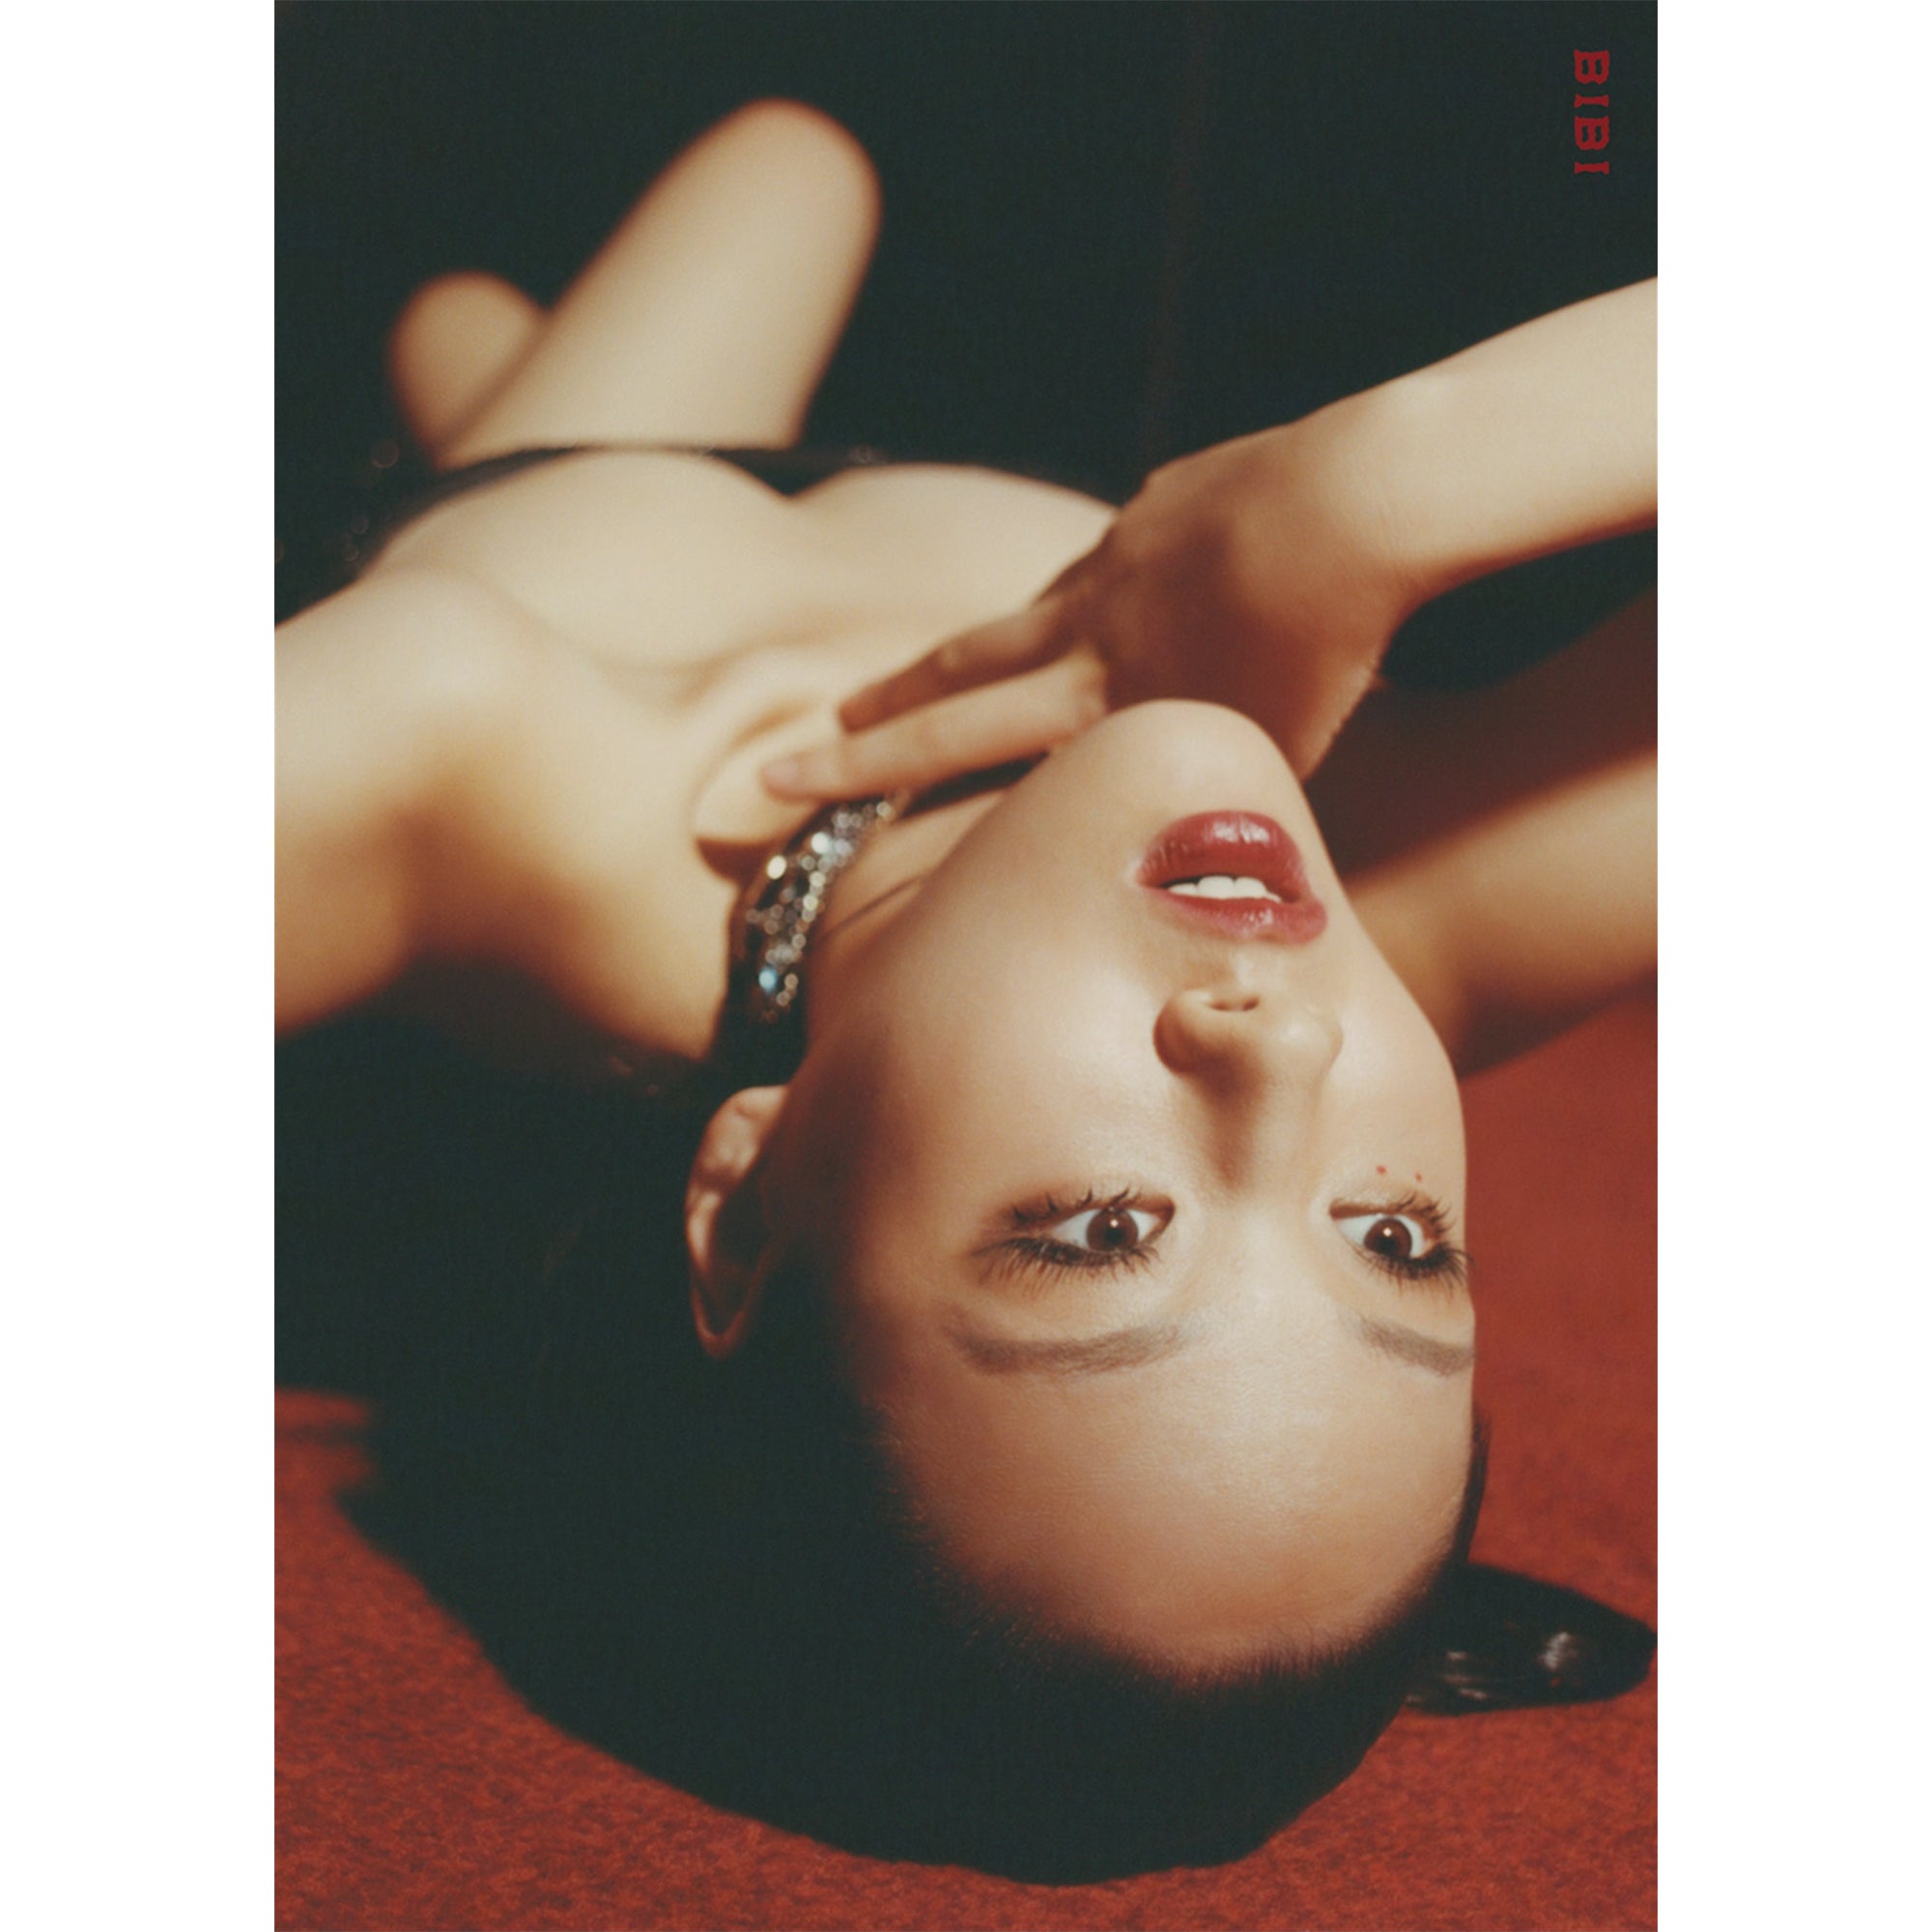 BIBI 1ST ALBUM 'LOWLIFE PRINCESS: NOIR' 나쁜년 COVER